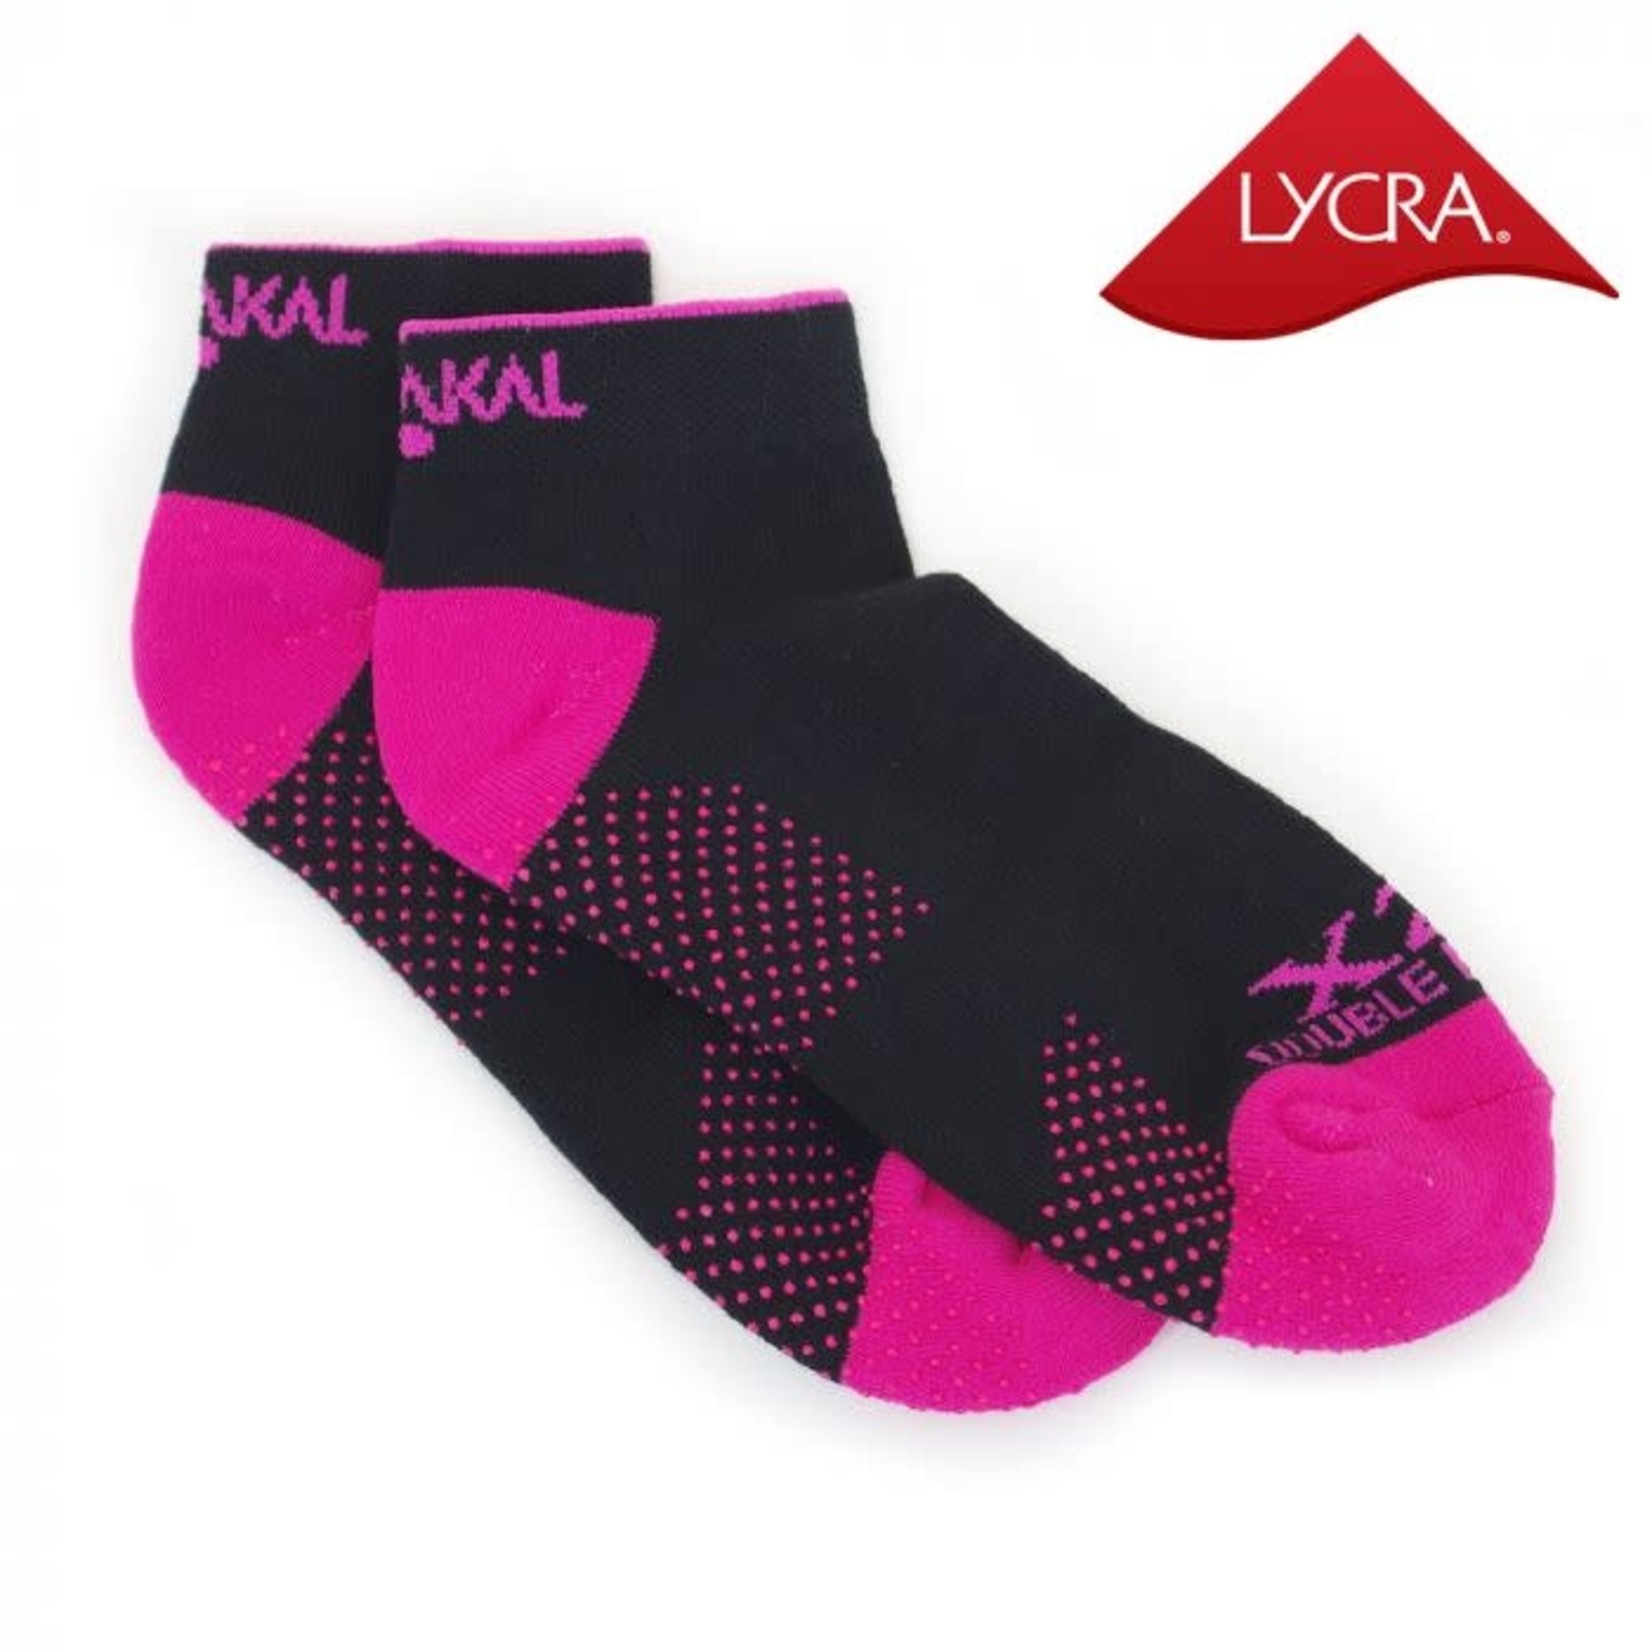 Karakal Karakal X2+ Ladies Technical Trainer Socks